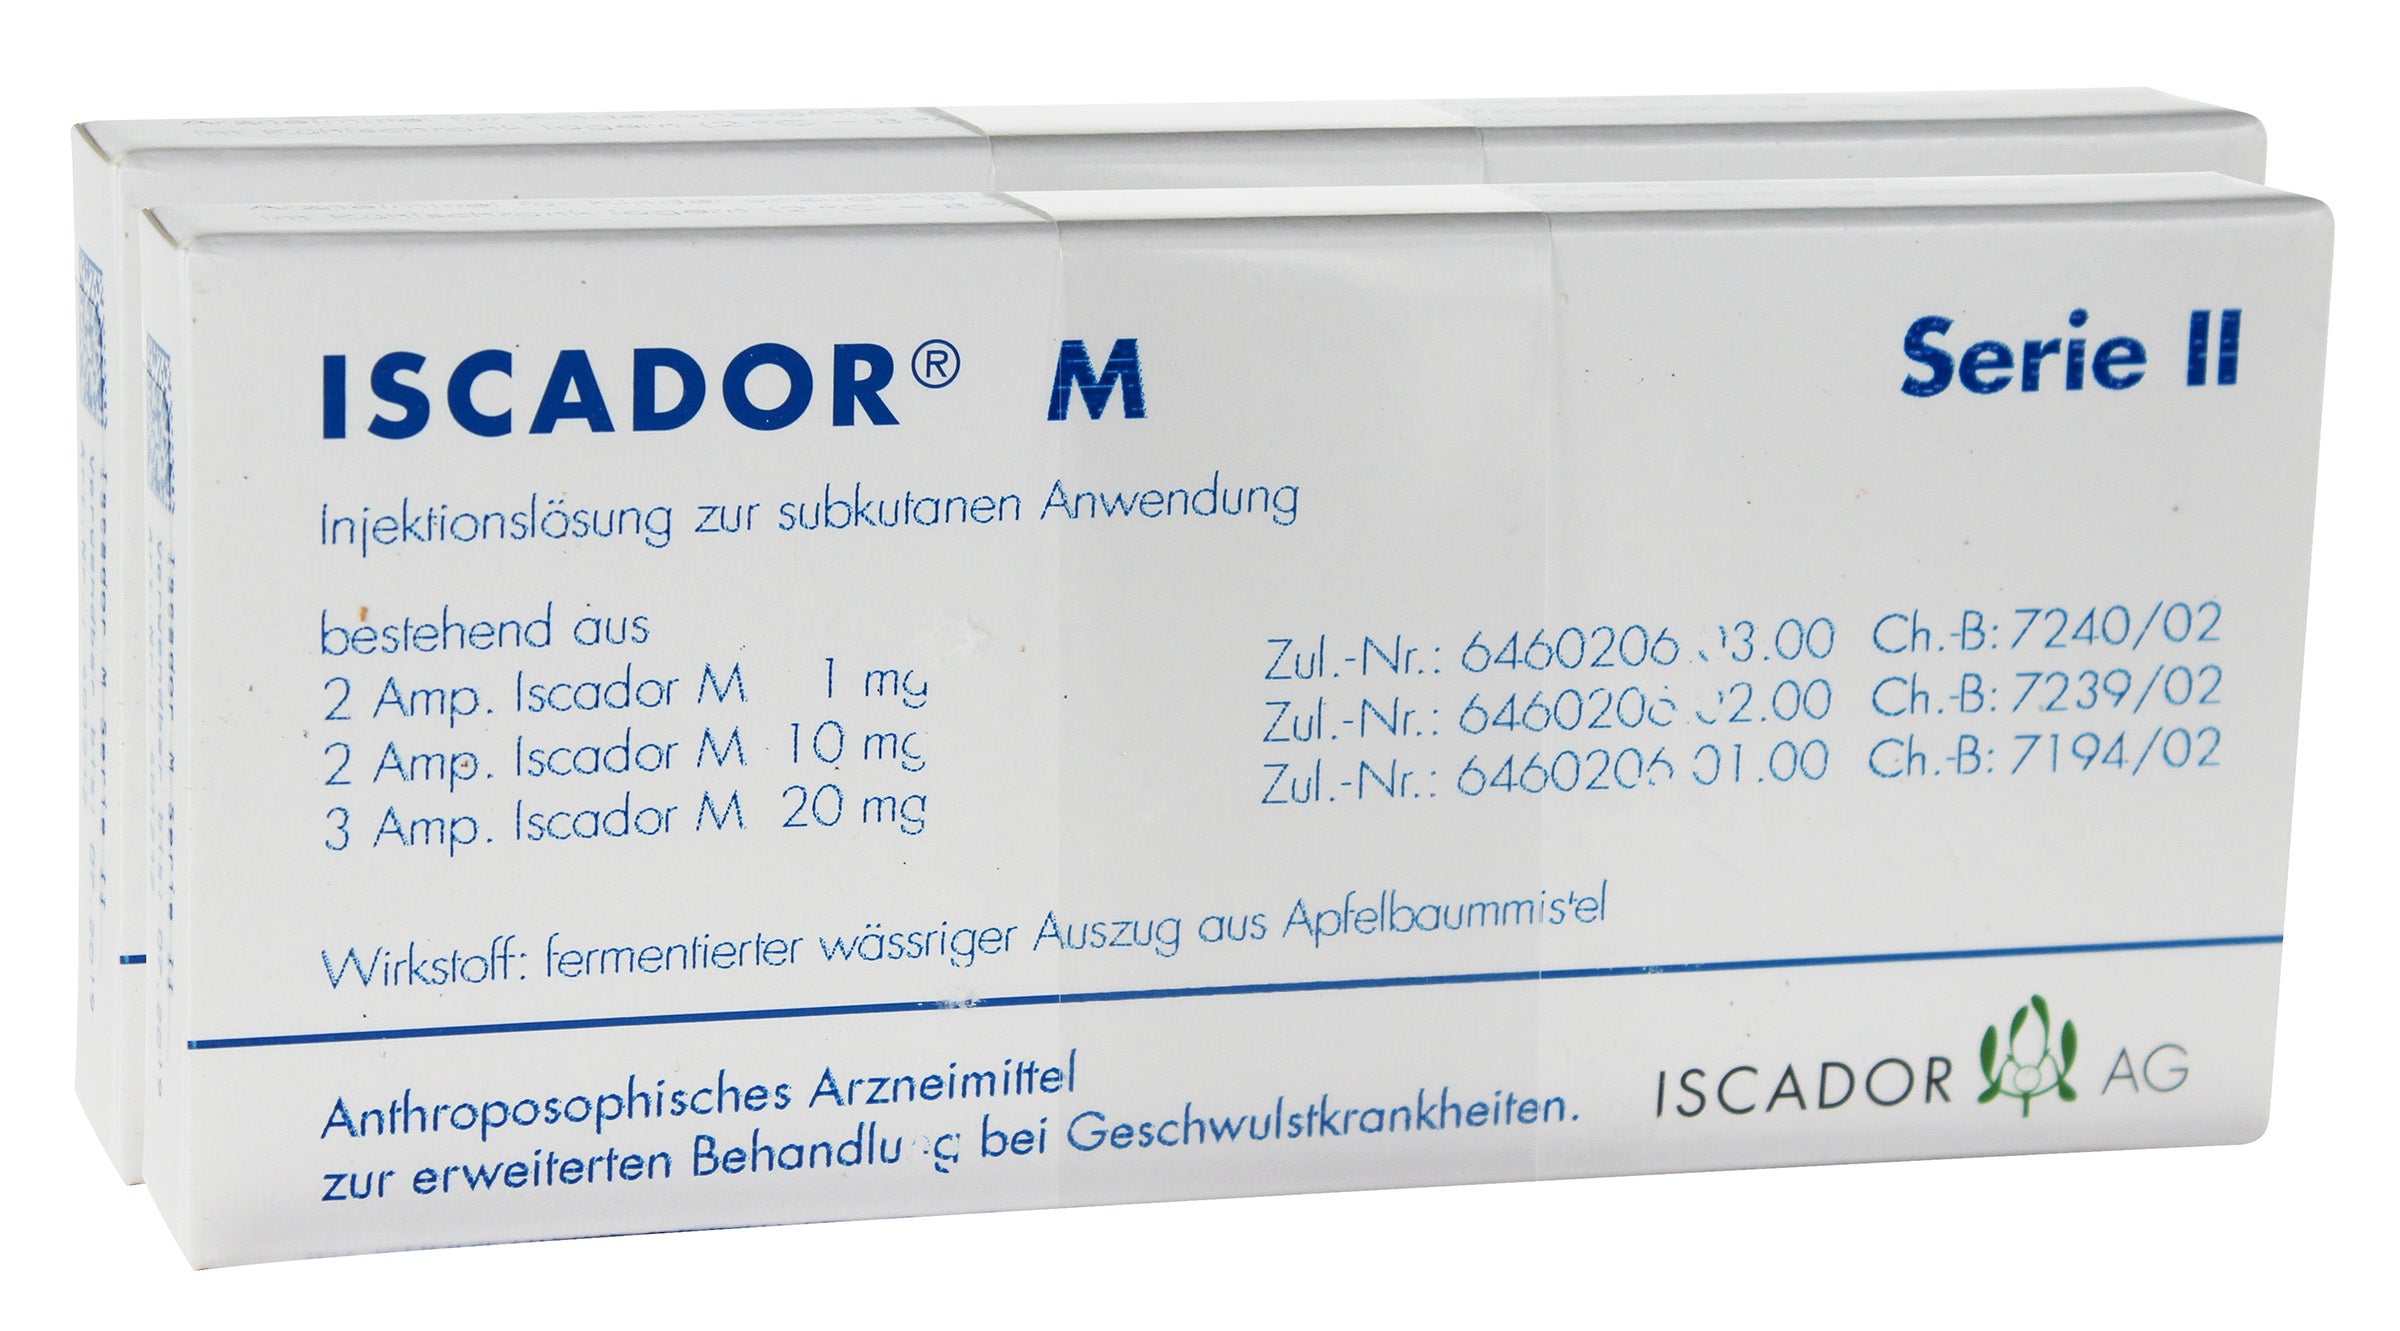 Iscador Mali (M) Series II Liquid